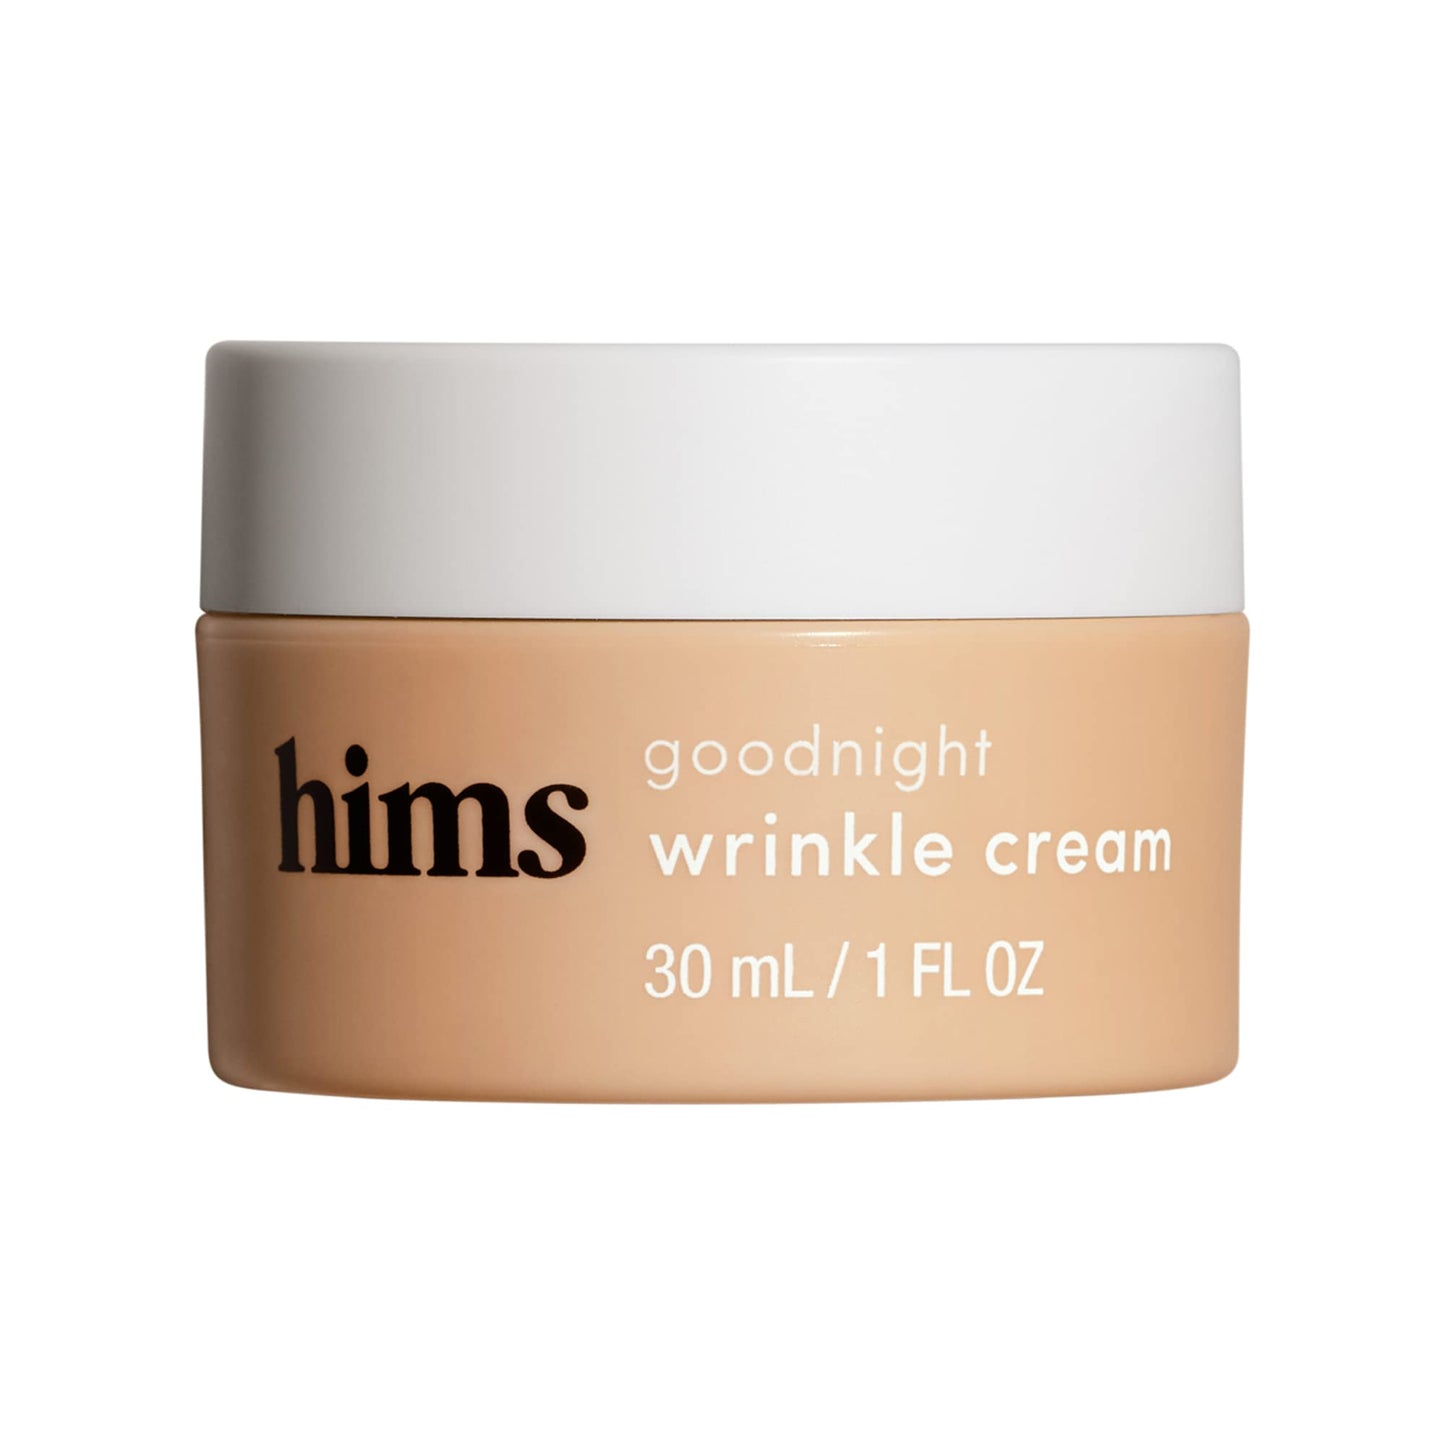 hims goodnight wrinkle cream for men - fine lines, puffiness, dark eye circles - caffeine, hyaluronic acid, night cream, almond scent - vegan, cruelty-free, no parabens - (1oz)